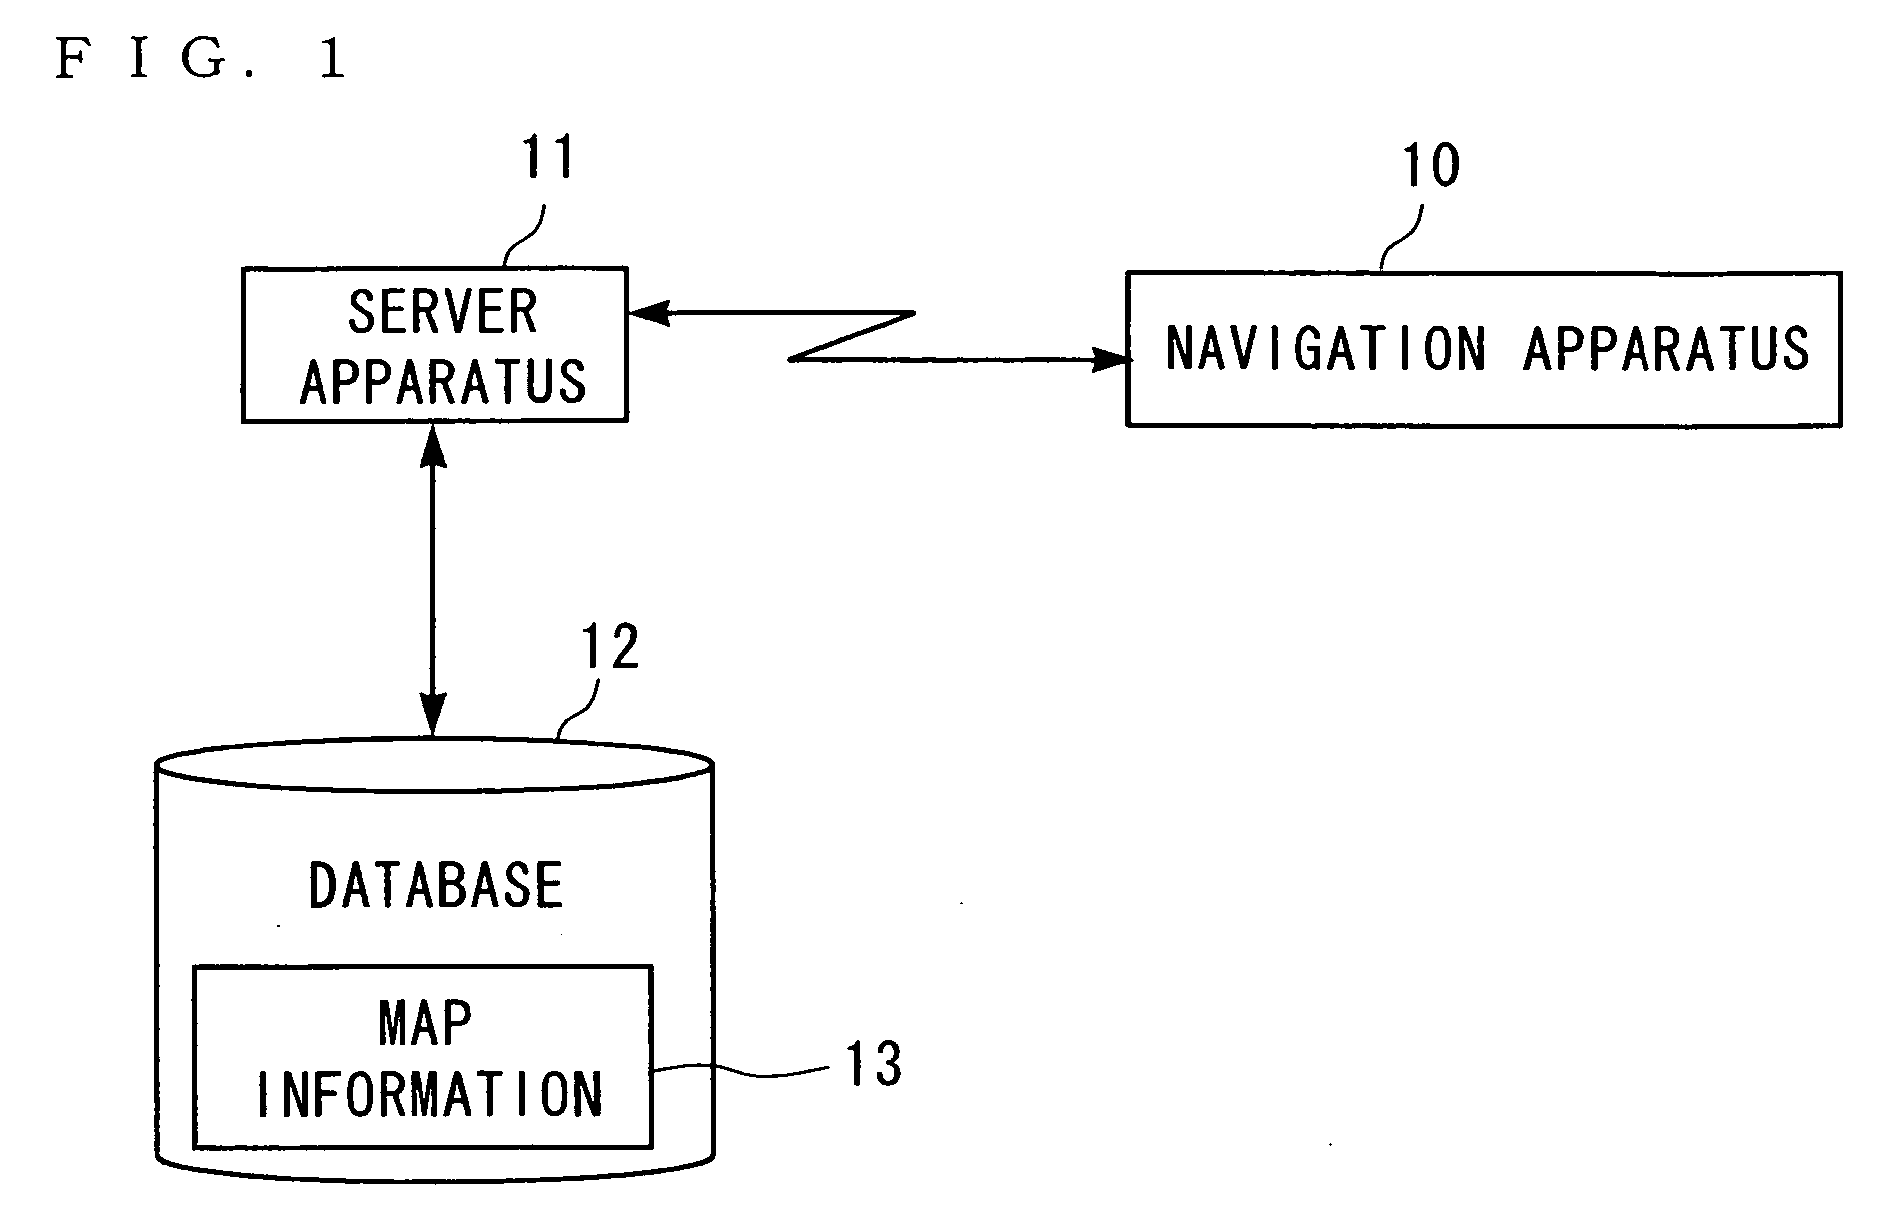 Navigation apparatus and server apparatus